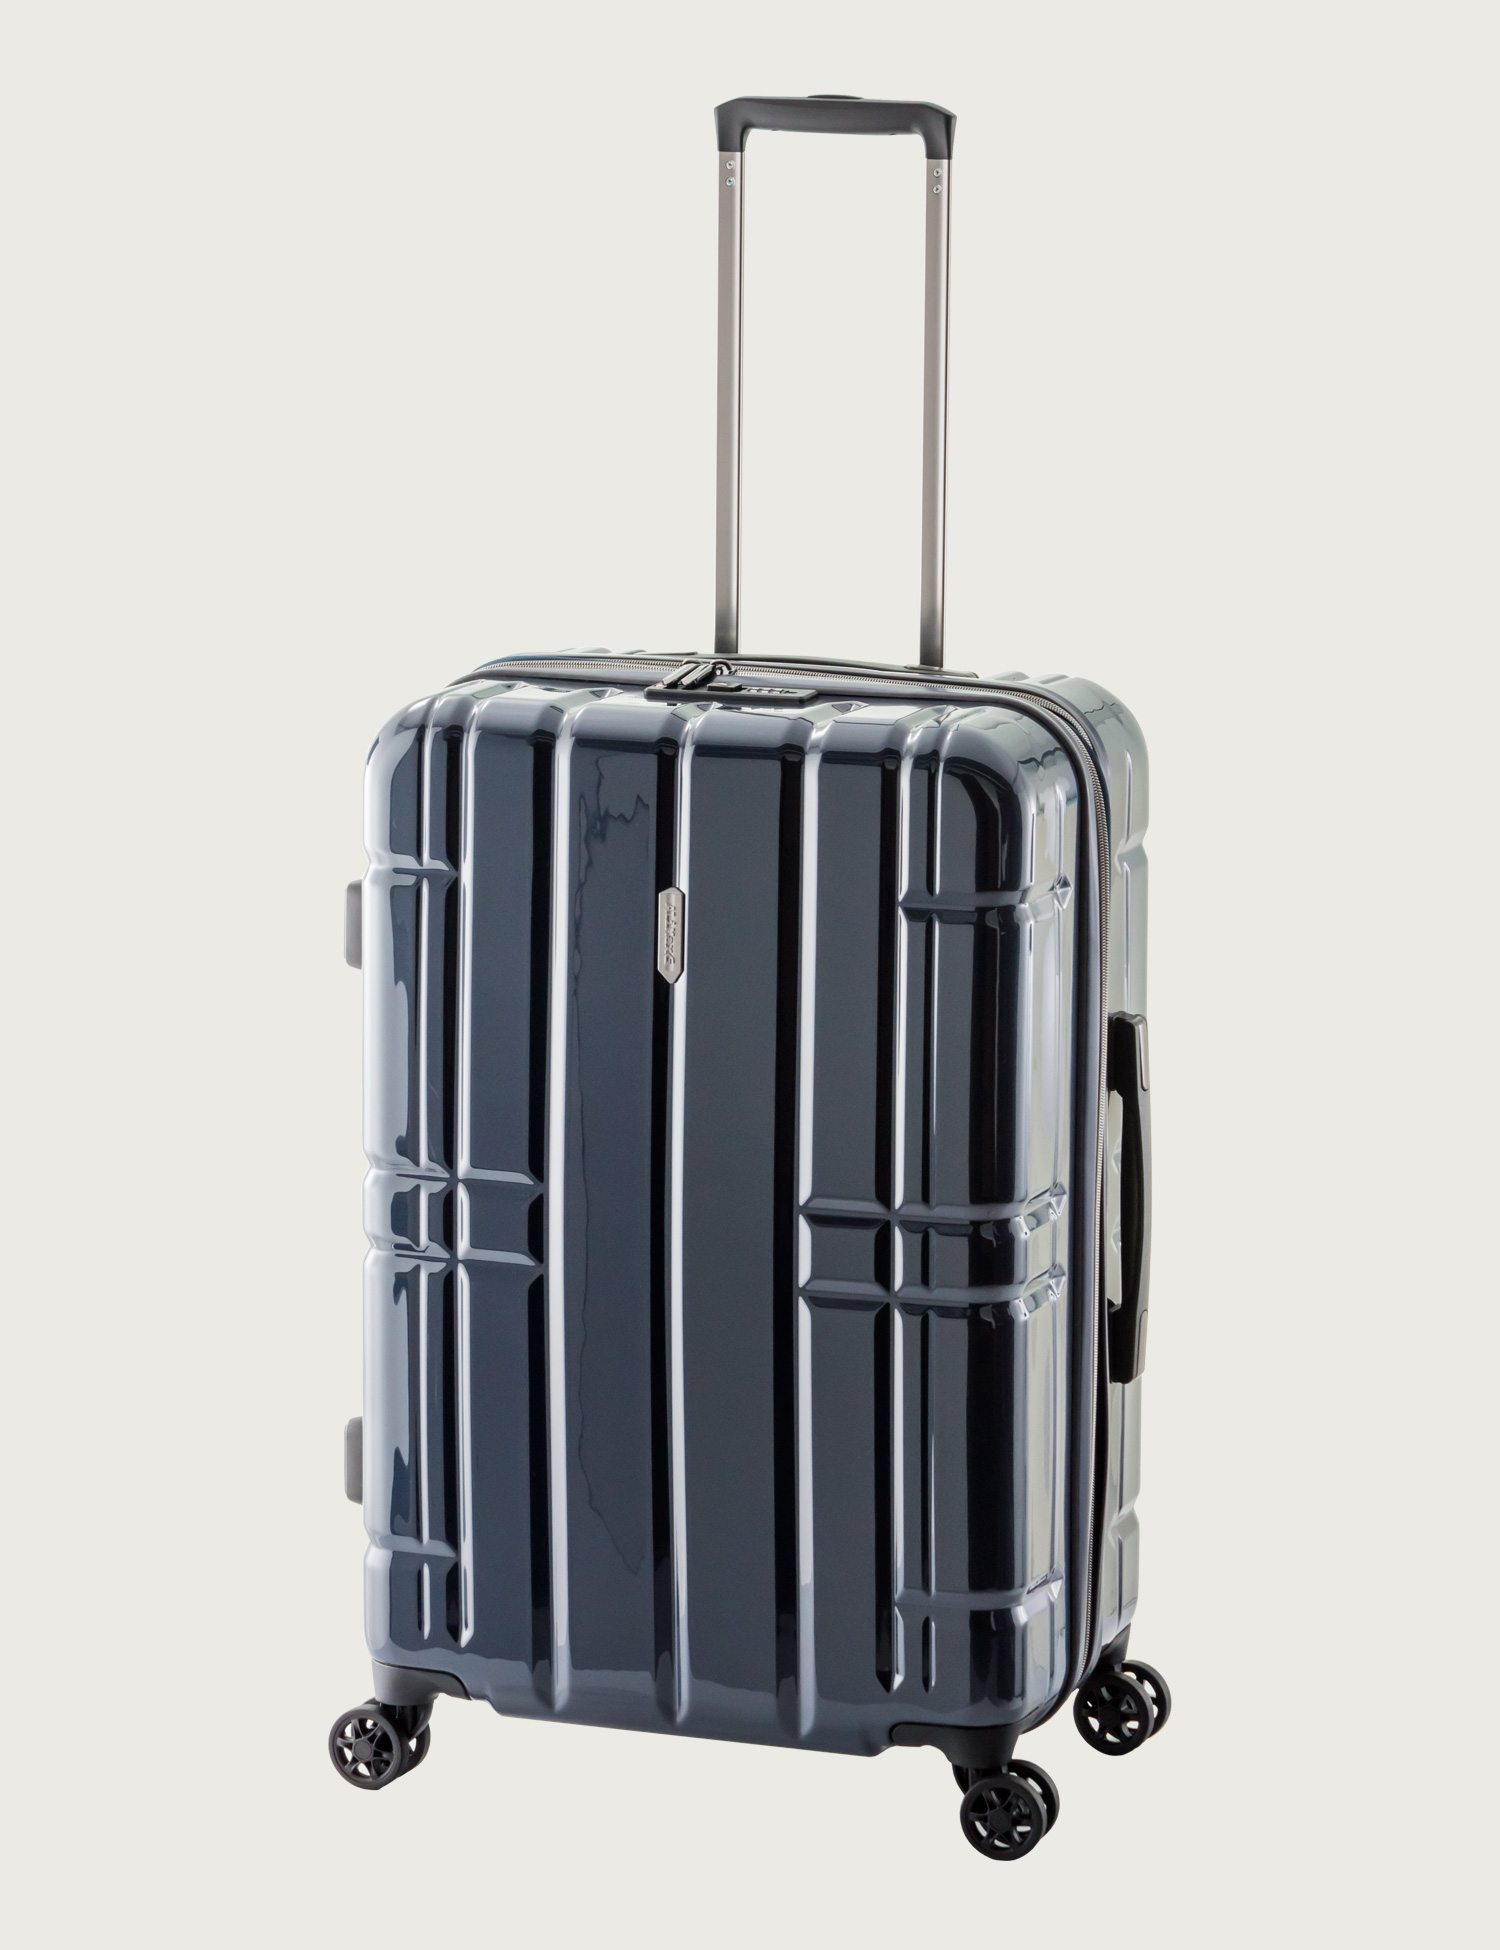 ALiMax | アジア・ラゲージ 公式サイト | Asia Luggage Inc.